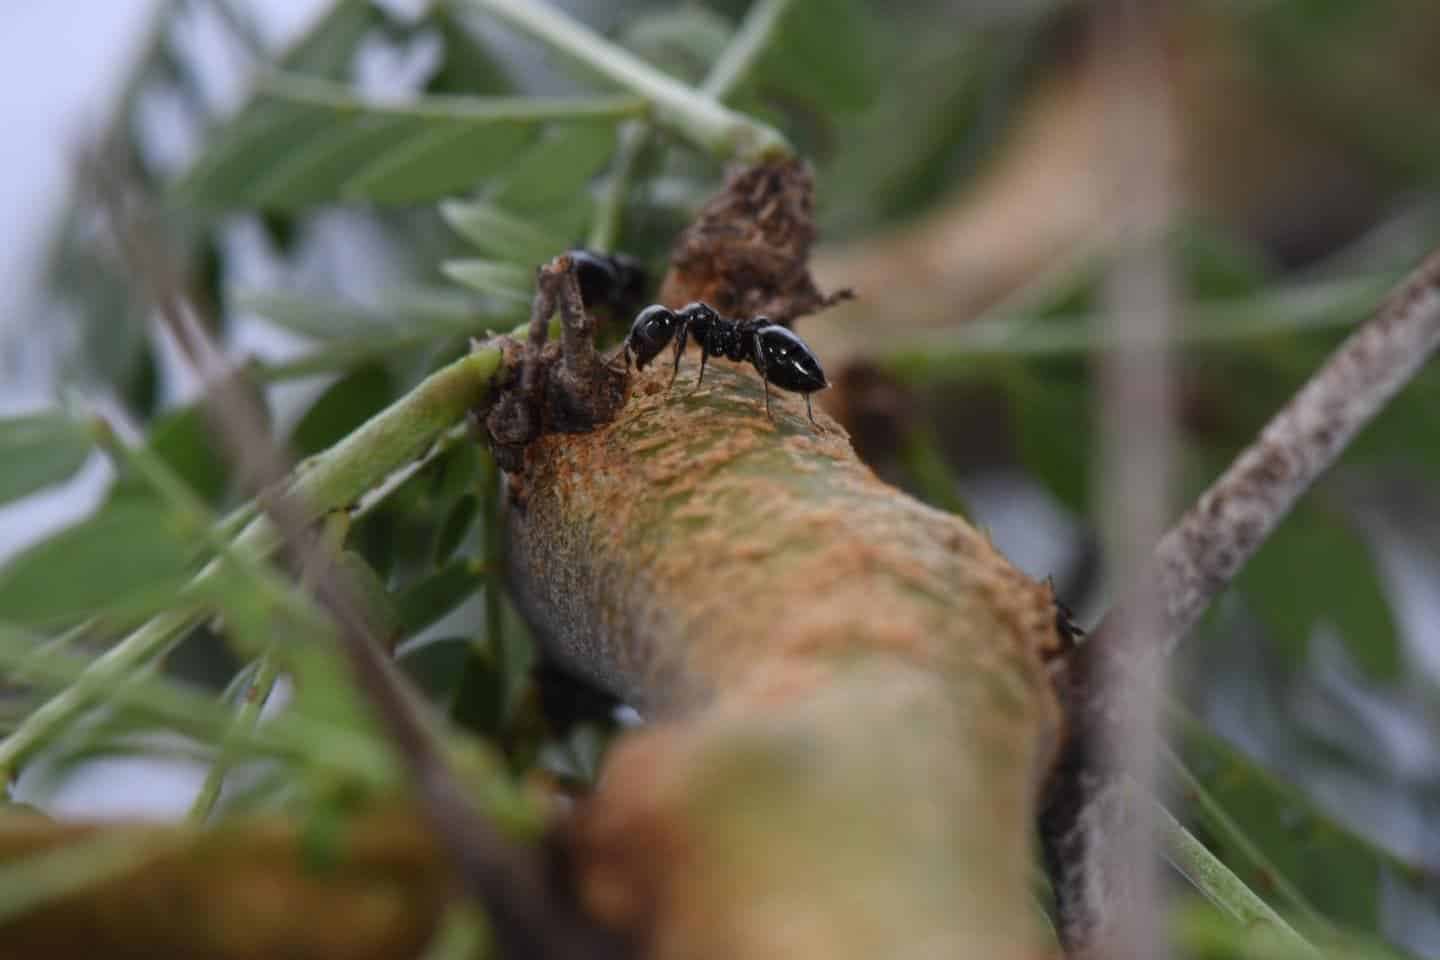 Acacia ants on their host tree (Crematogaster mimosae, Acacia zanzibarica). Image credits: Felix A. Hager and Kathrin Krausa.